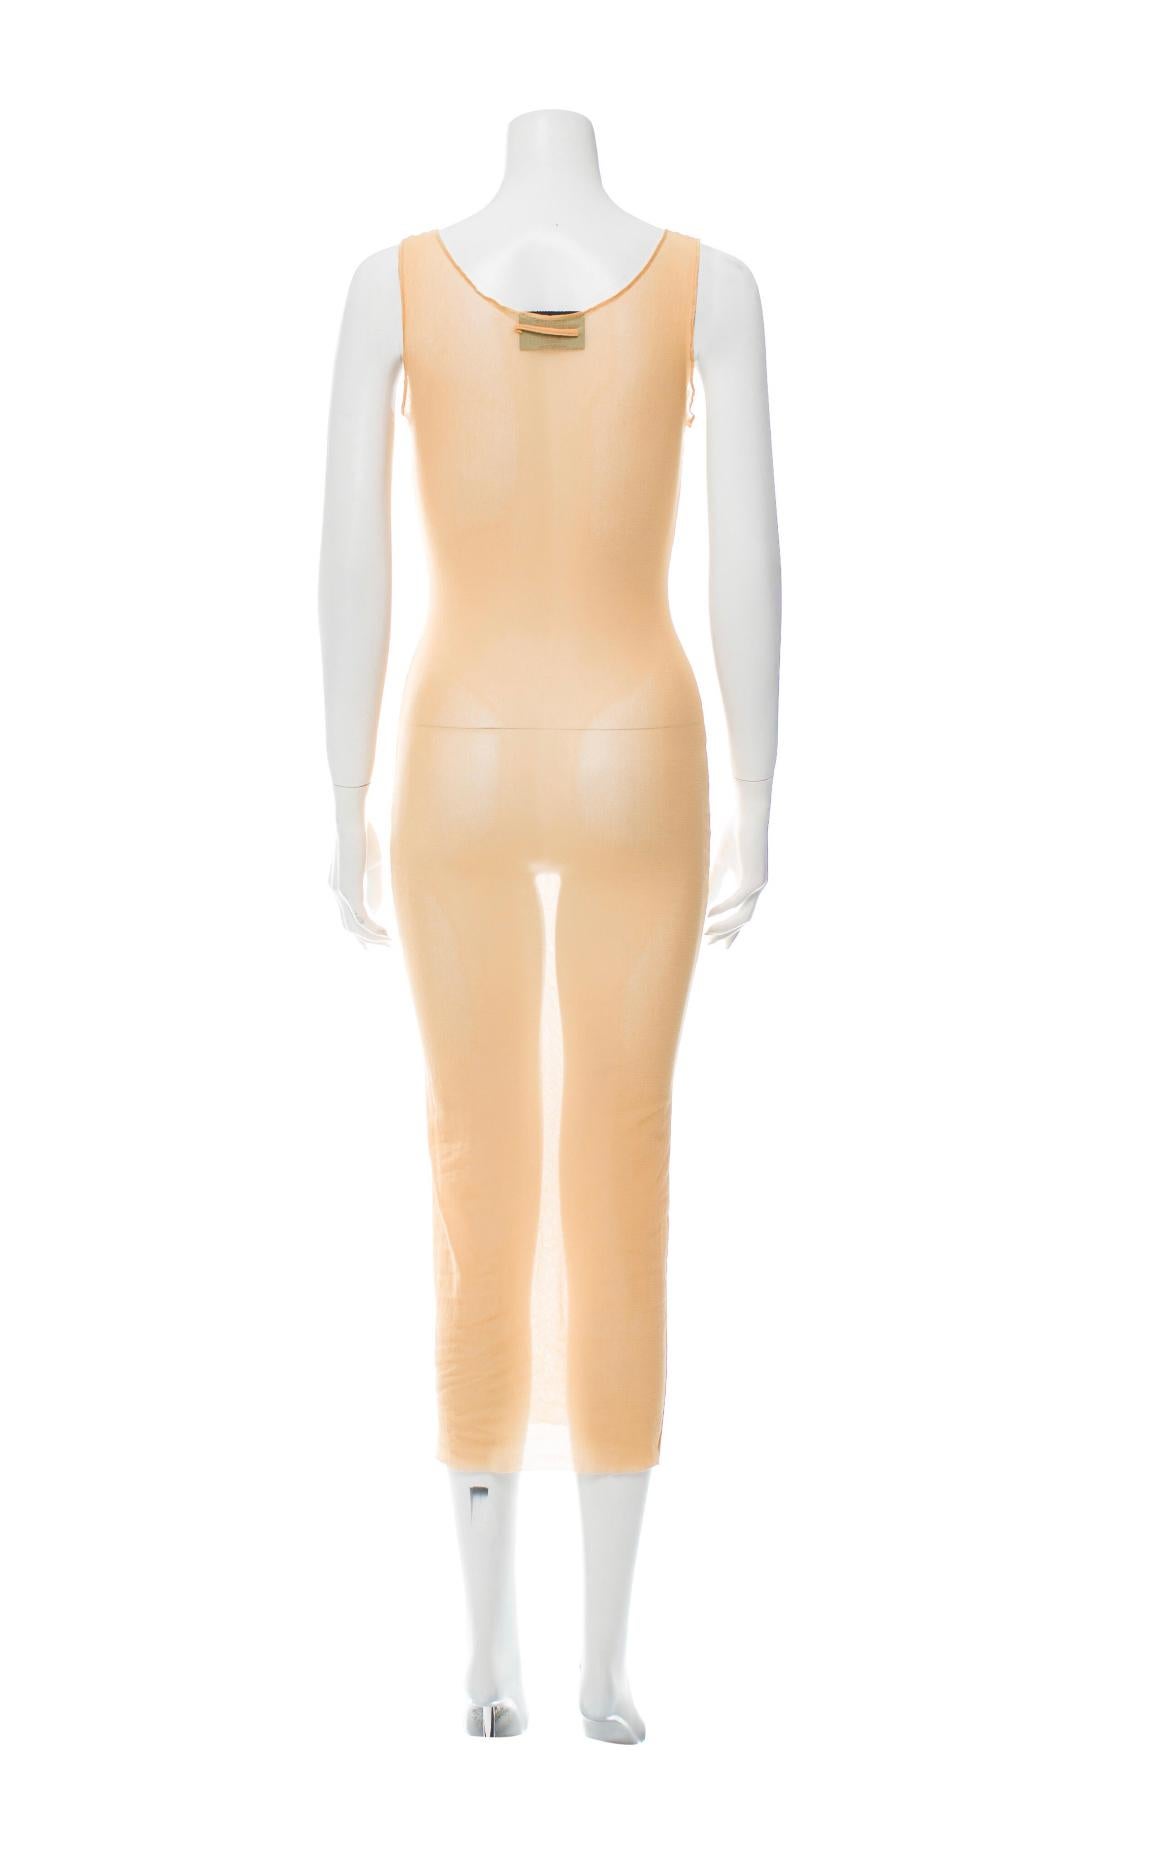 Jean Paul Gaultier nude mesh sheer tank dress. 26